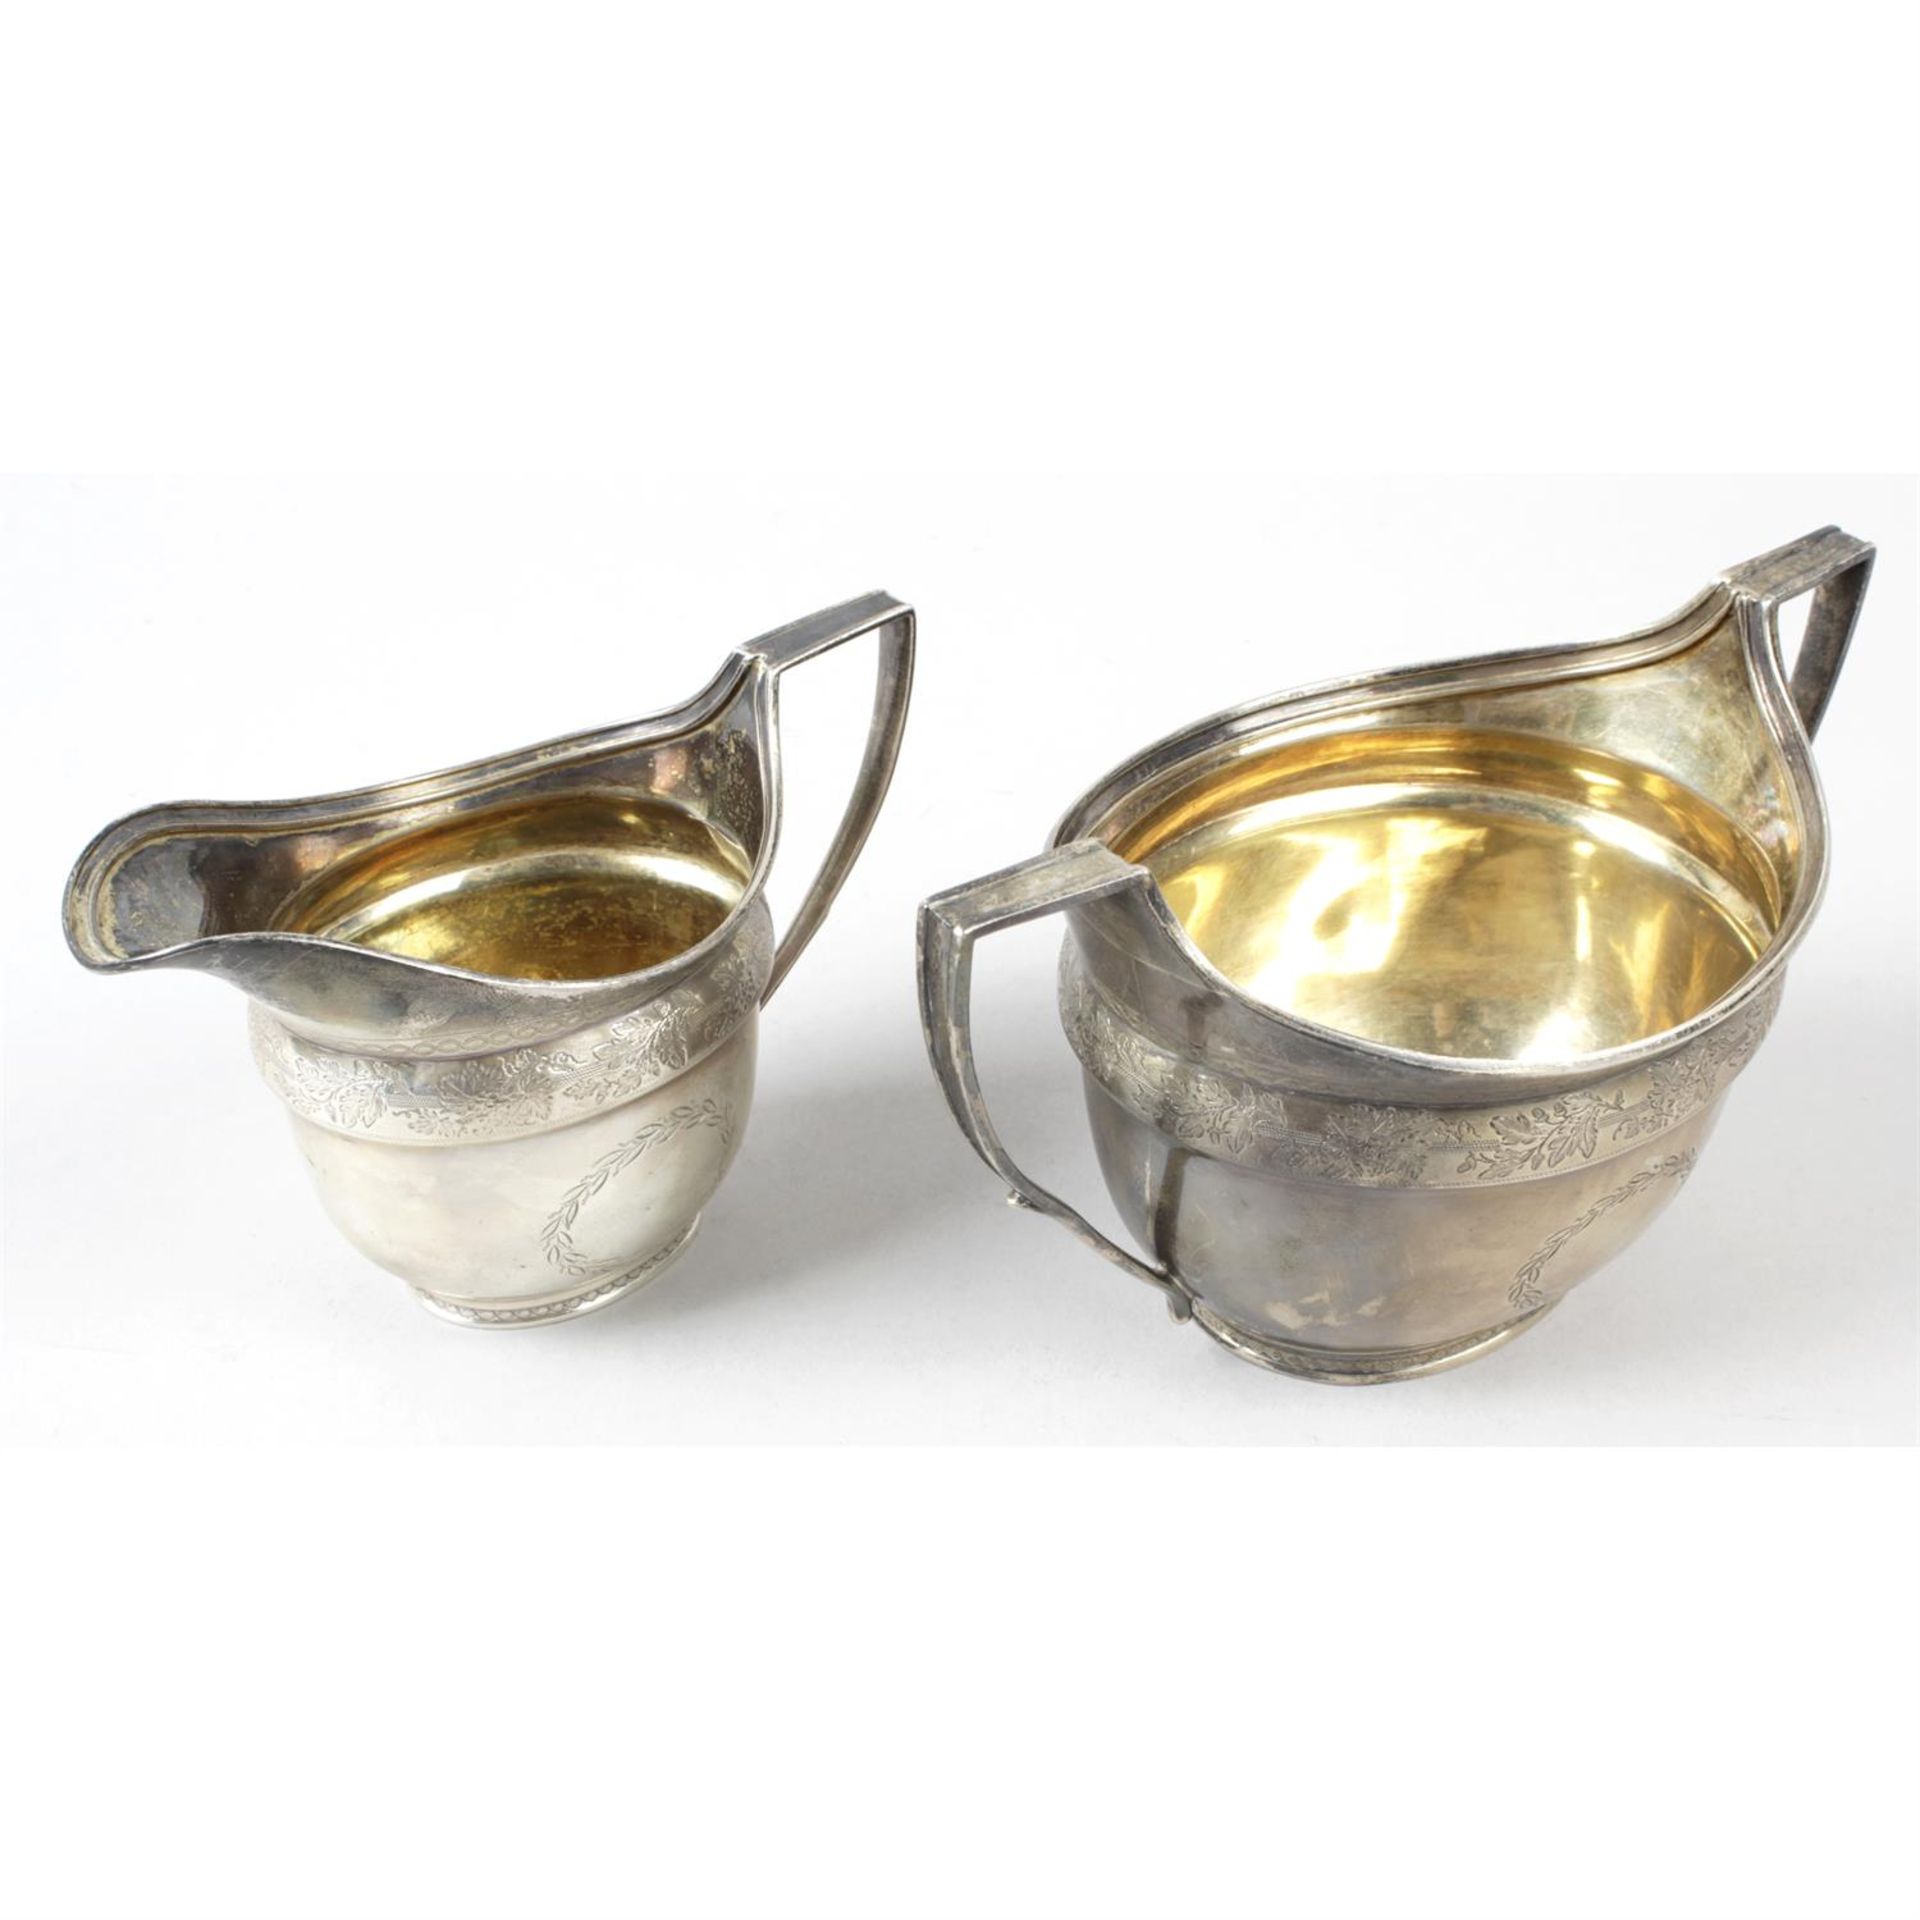 A George III silver twin-handled sugar bowl & matching cream jug.